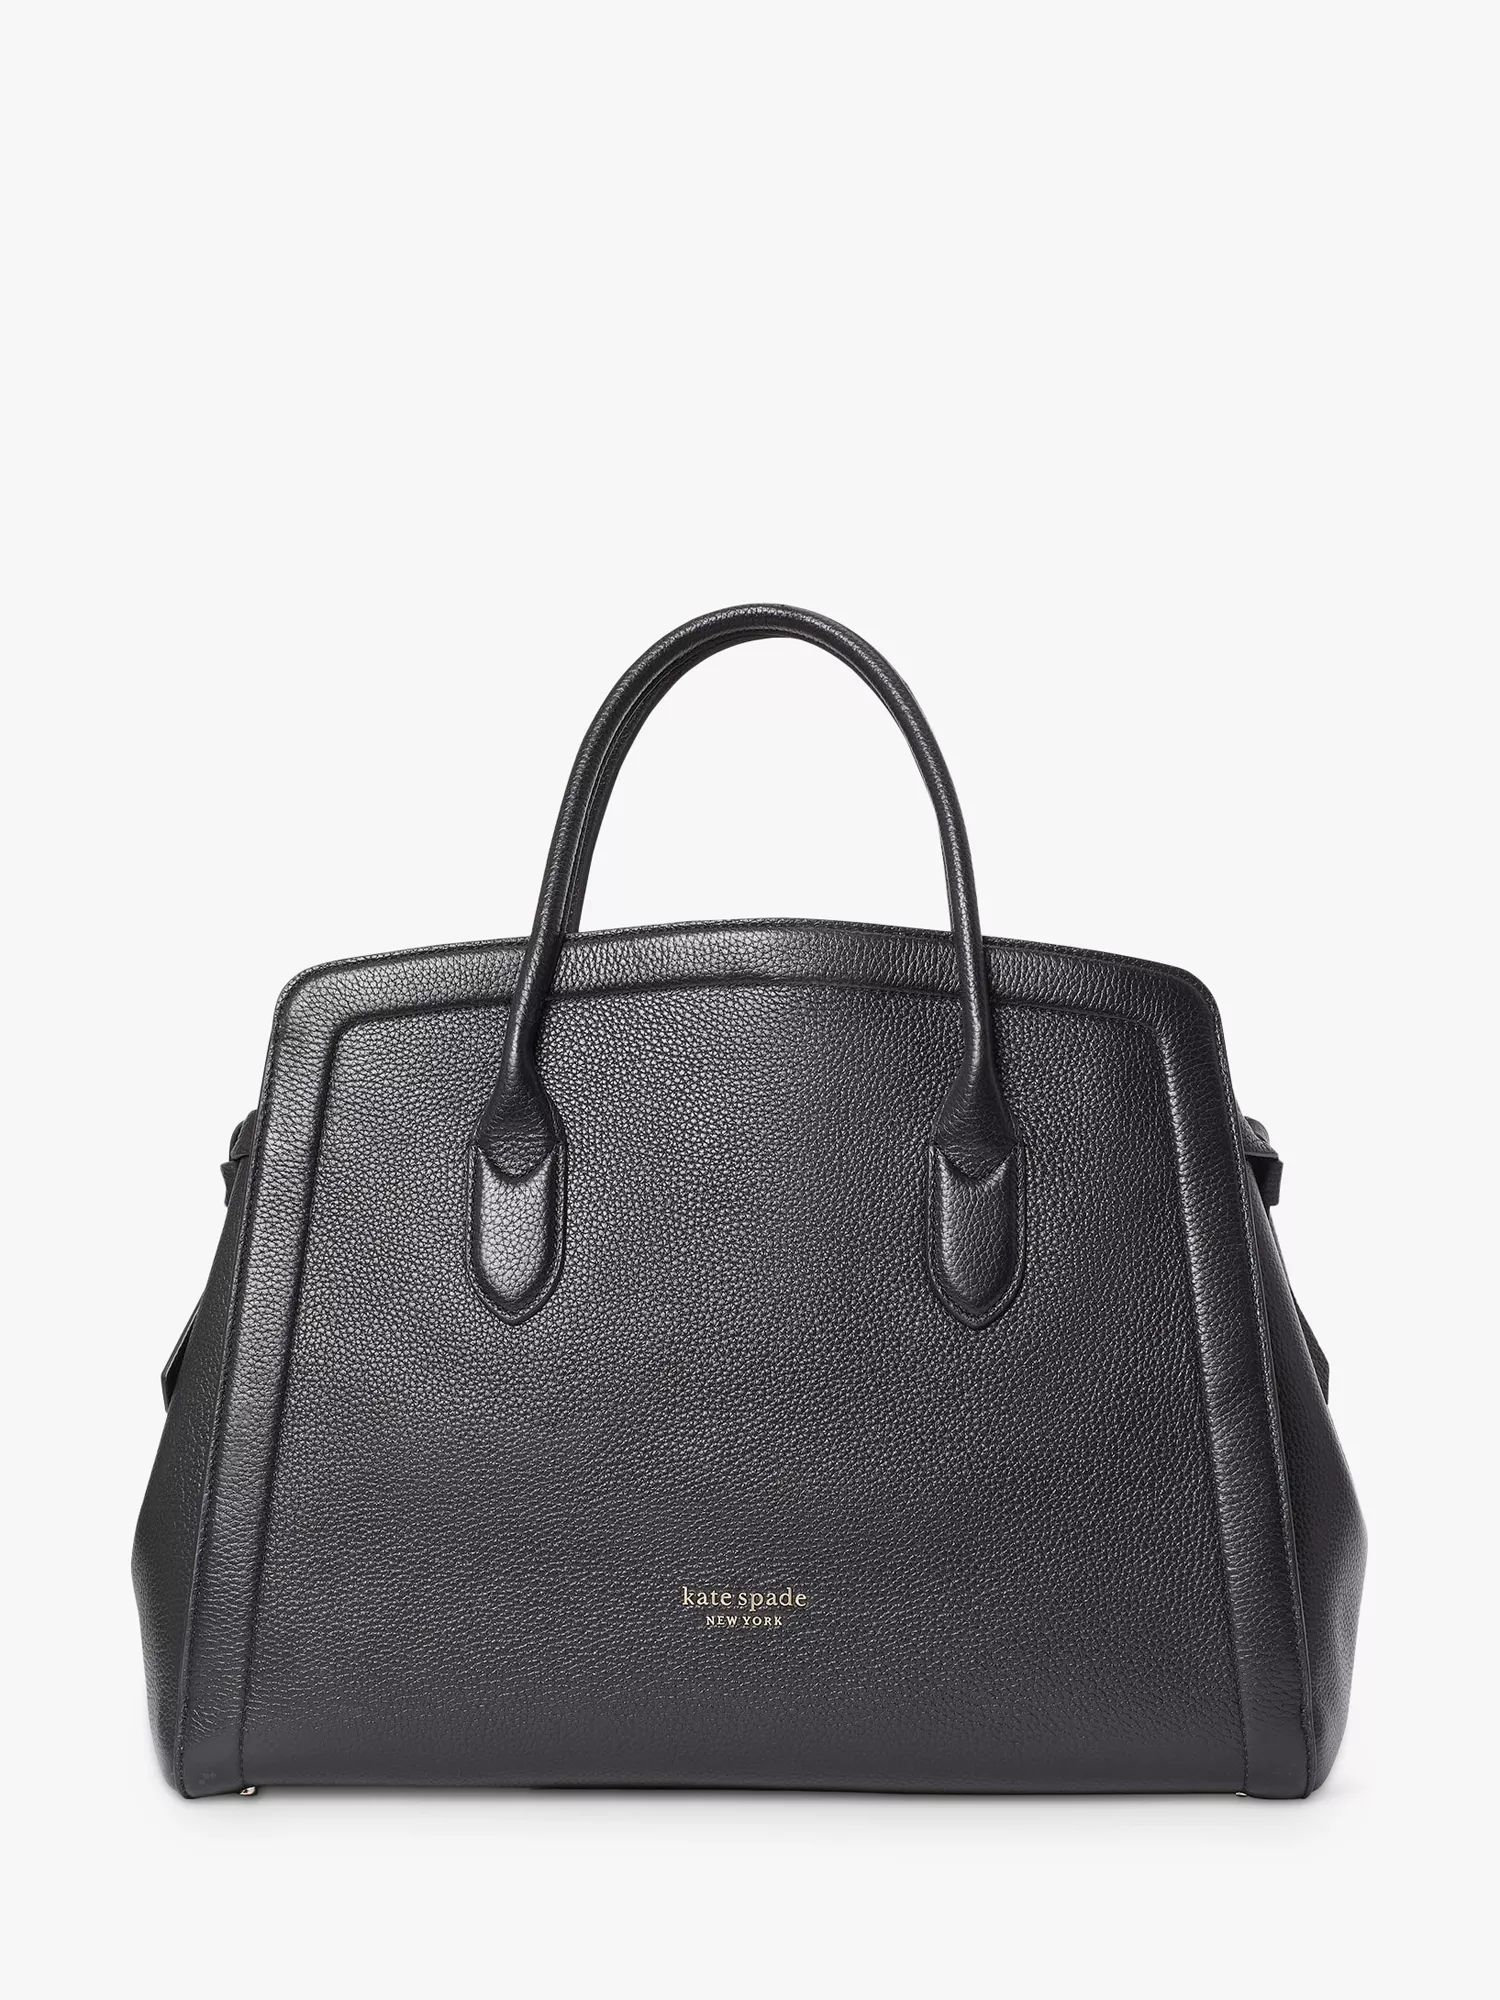 kate spade new york Knott Large Pebbled Leather Travel Bag, Black | John Lewis (UK)